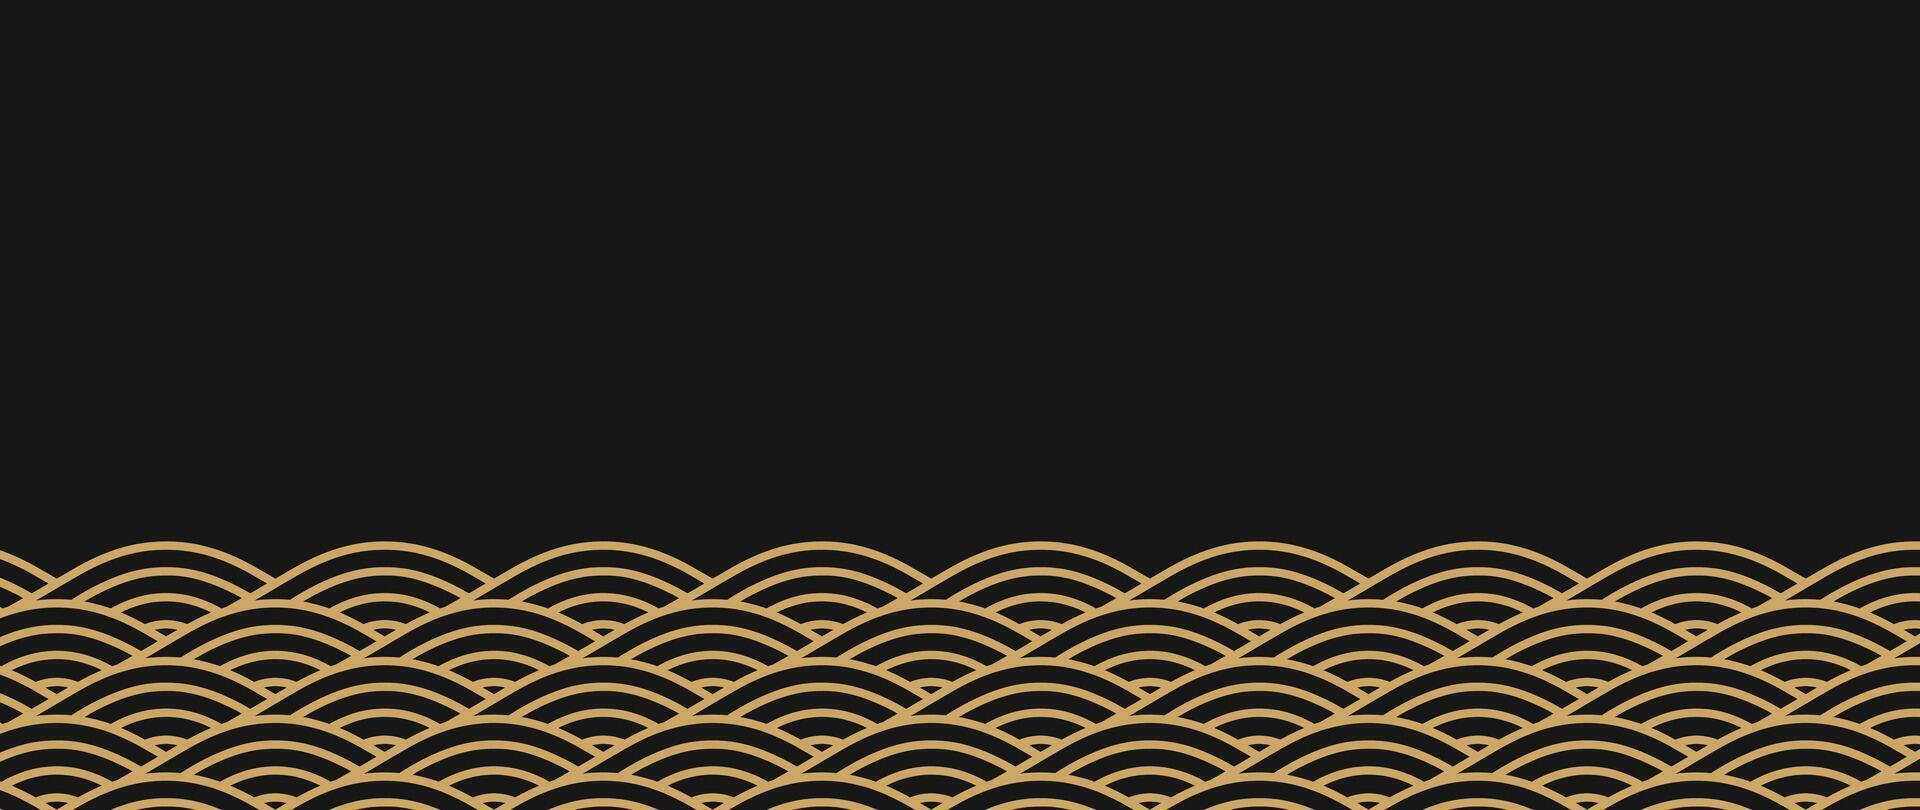 Japanese gold wave background vector. Wallpaper design with gold and black ocean wave pattern backdrop. Modern luxury oriental illustration for cover, banner, website, decor, border. vector